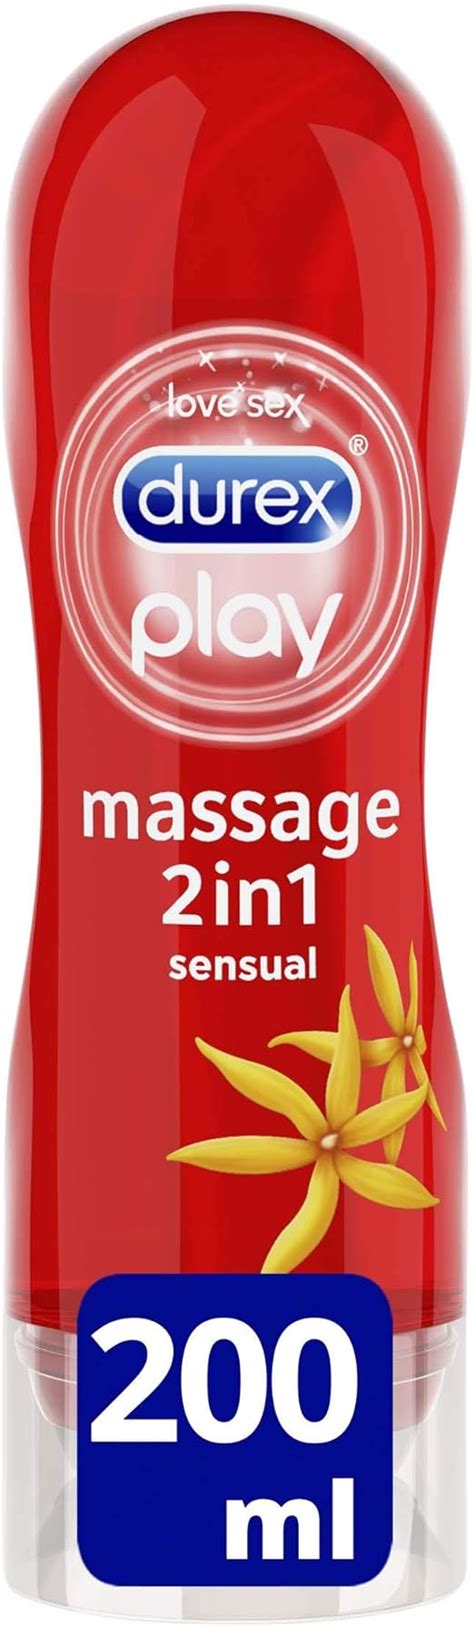 durex massage lube 2 in 1 sensual lubricant gel with ylang ylang 200 ml uk health